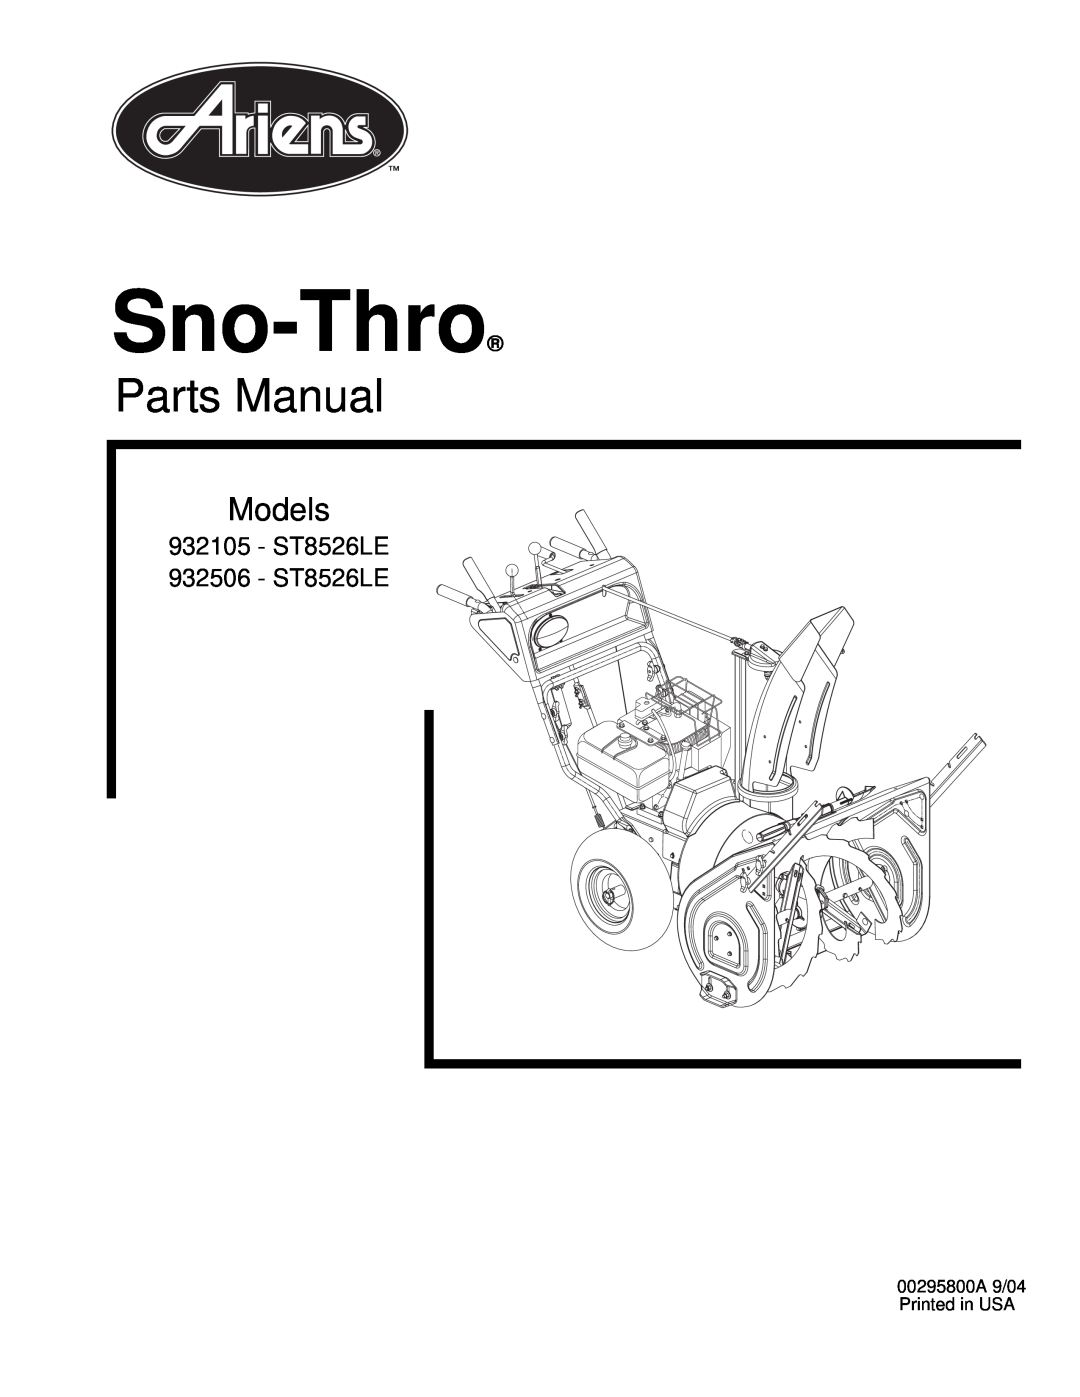 Ariens manual Sno-Thro, Parts Manual, Models, ST8526LE 932506 - ST8526LE 